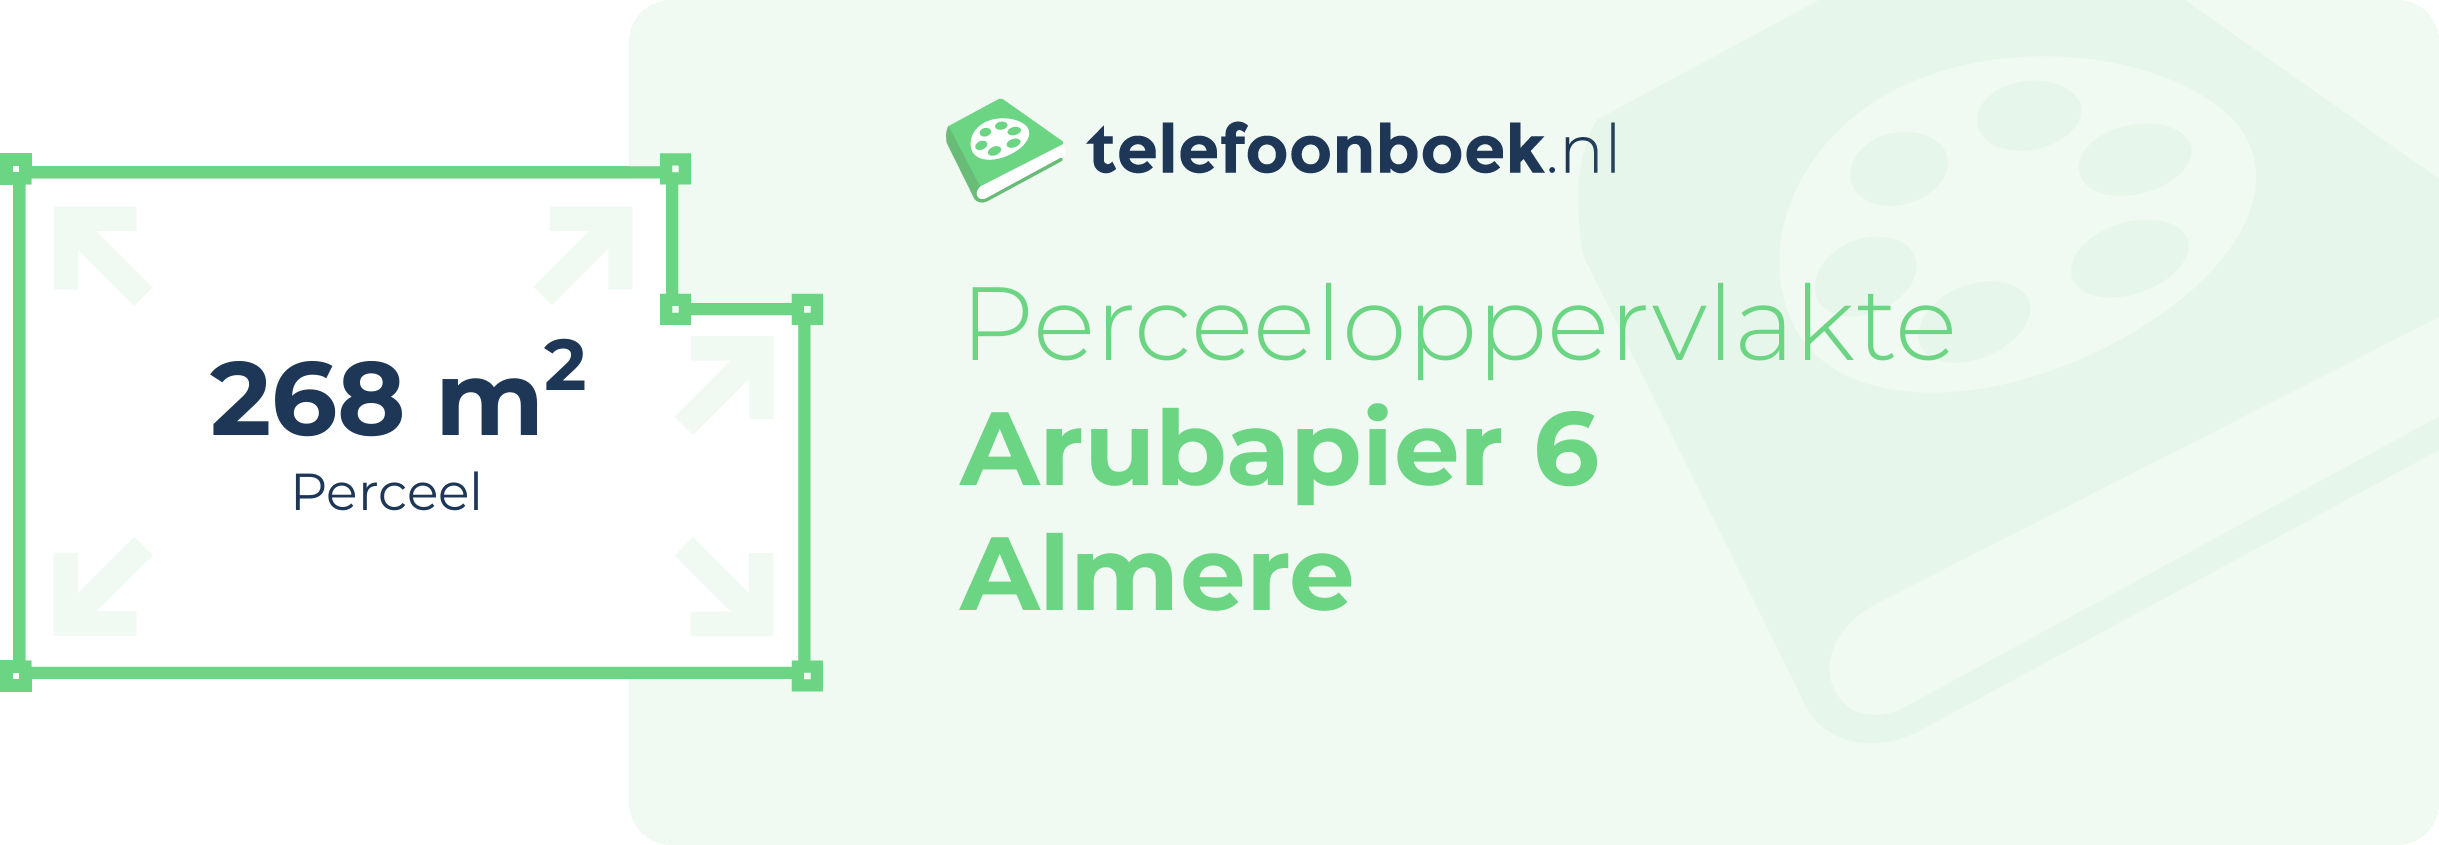 Perceeloppervlakte Arubapier 6 Almere